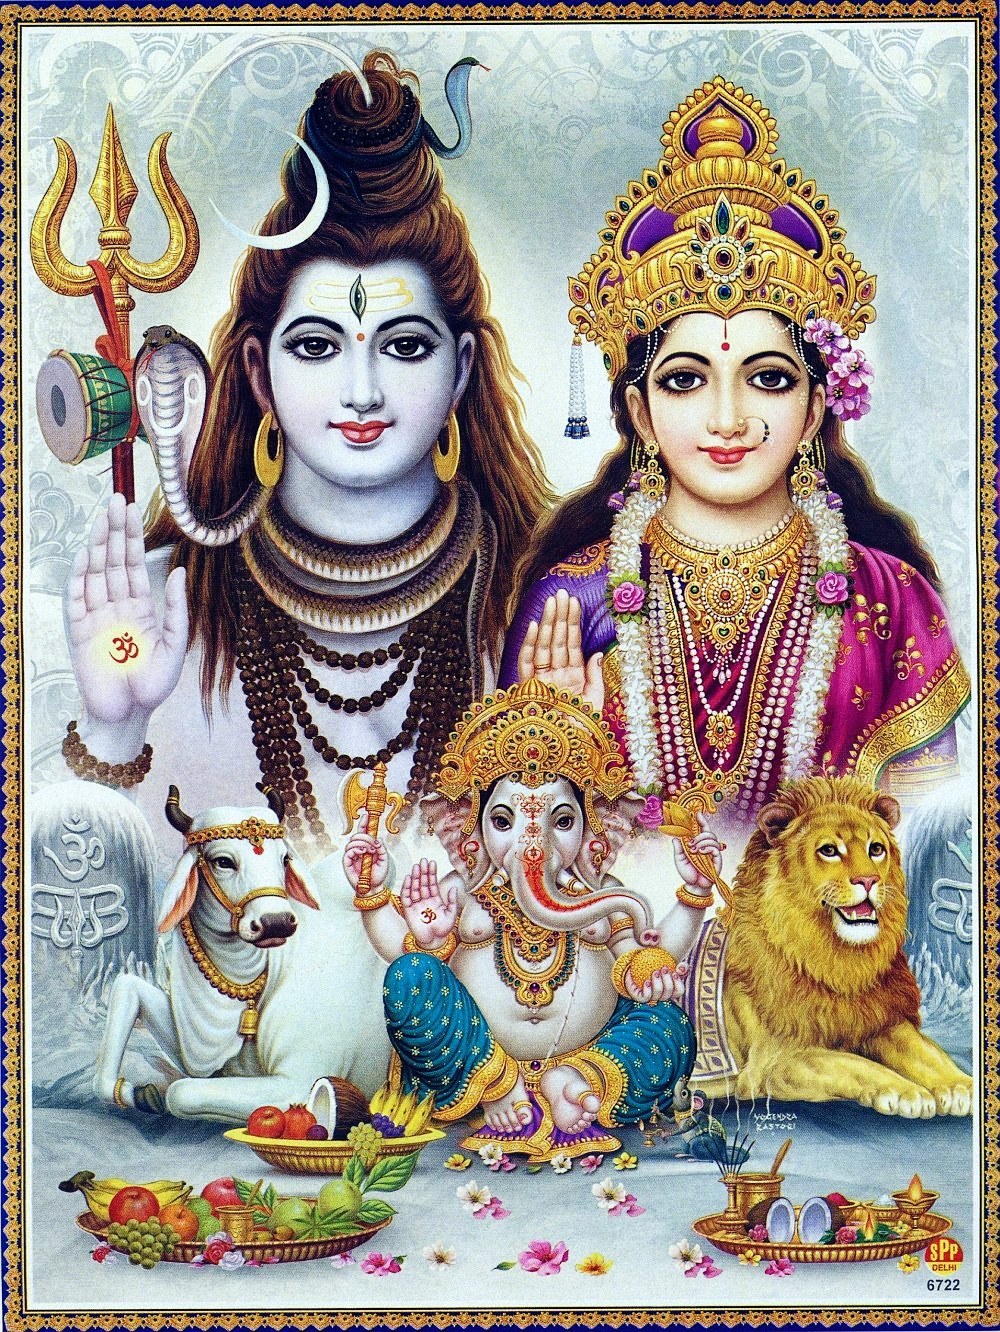 Hindu Cosmos - Lord Shiva & Parvati Ganesh offer their blessings...